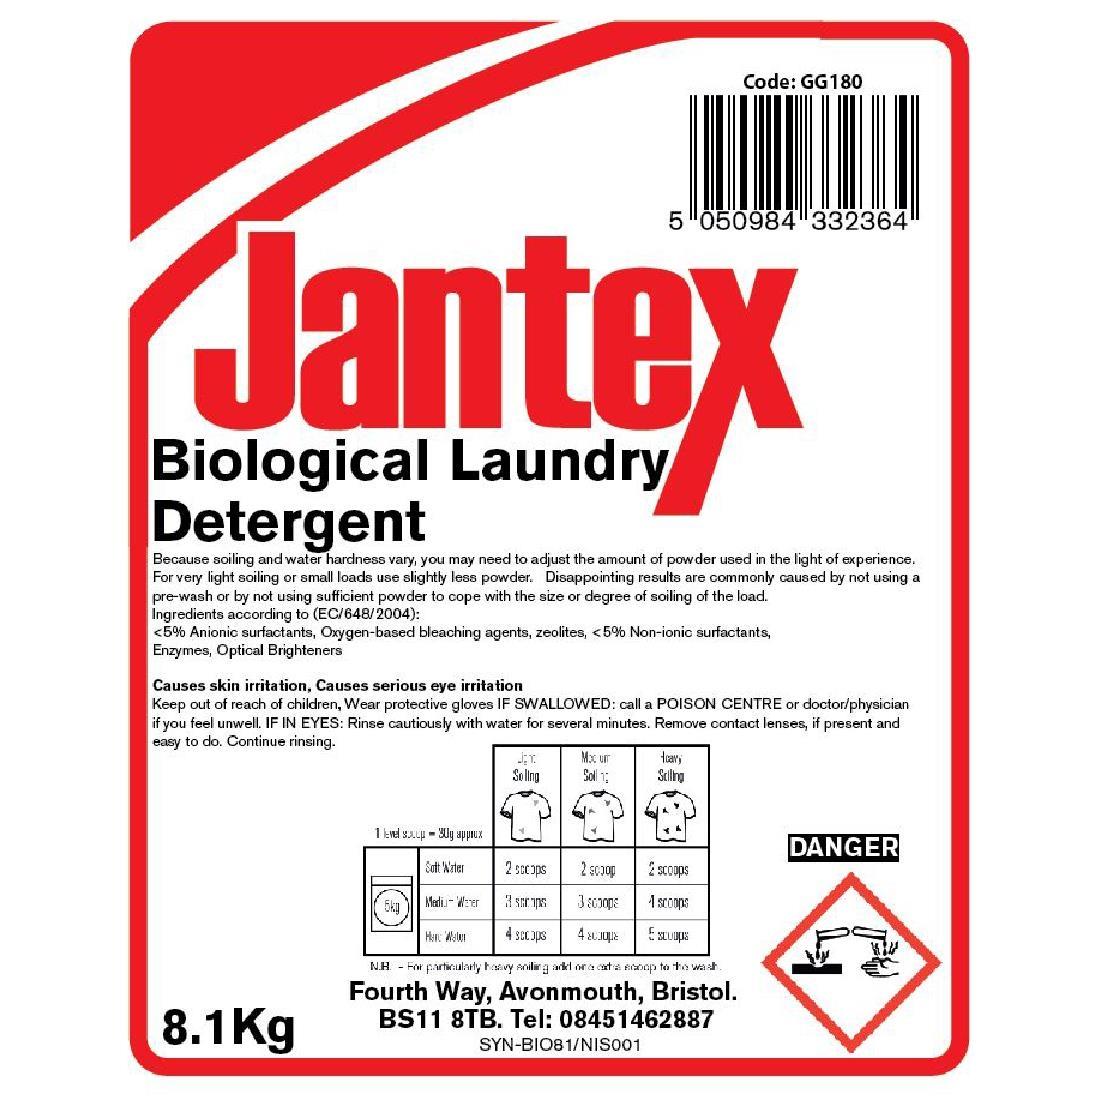 Jantex Biological Laundry Detergent Powder 8.1kg - GG180  - 2